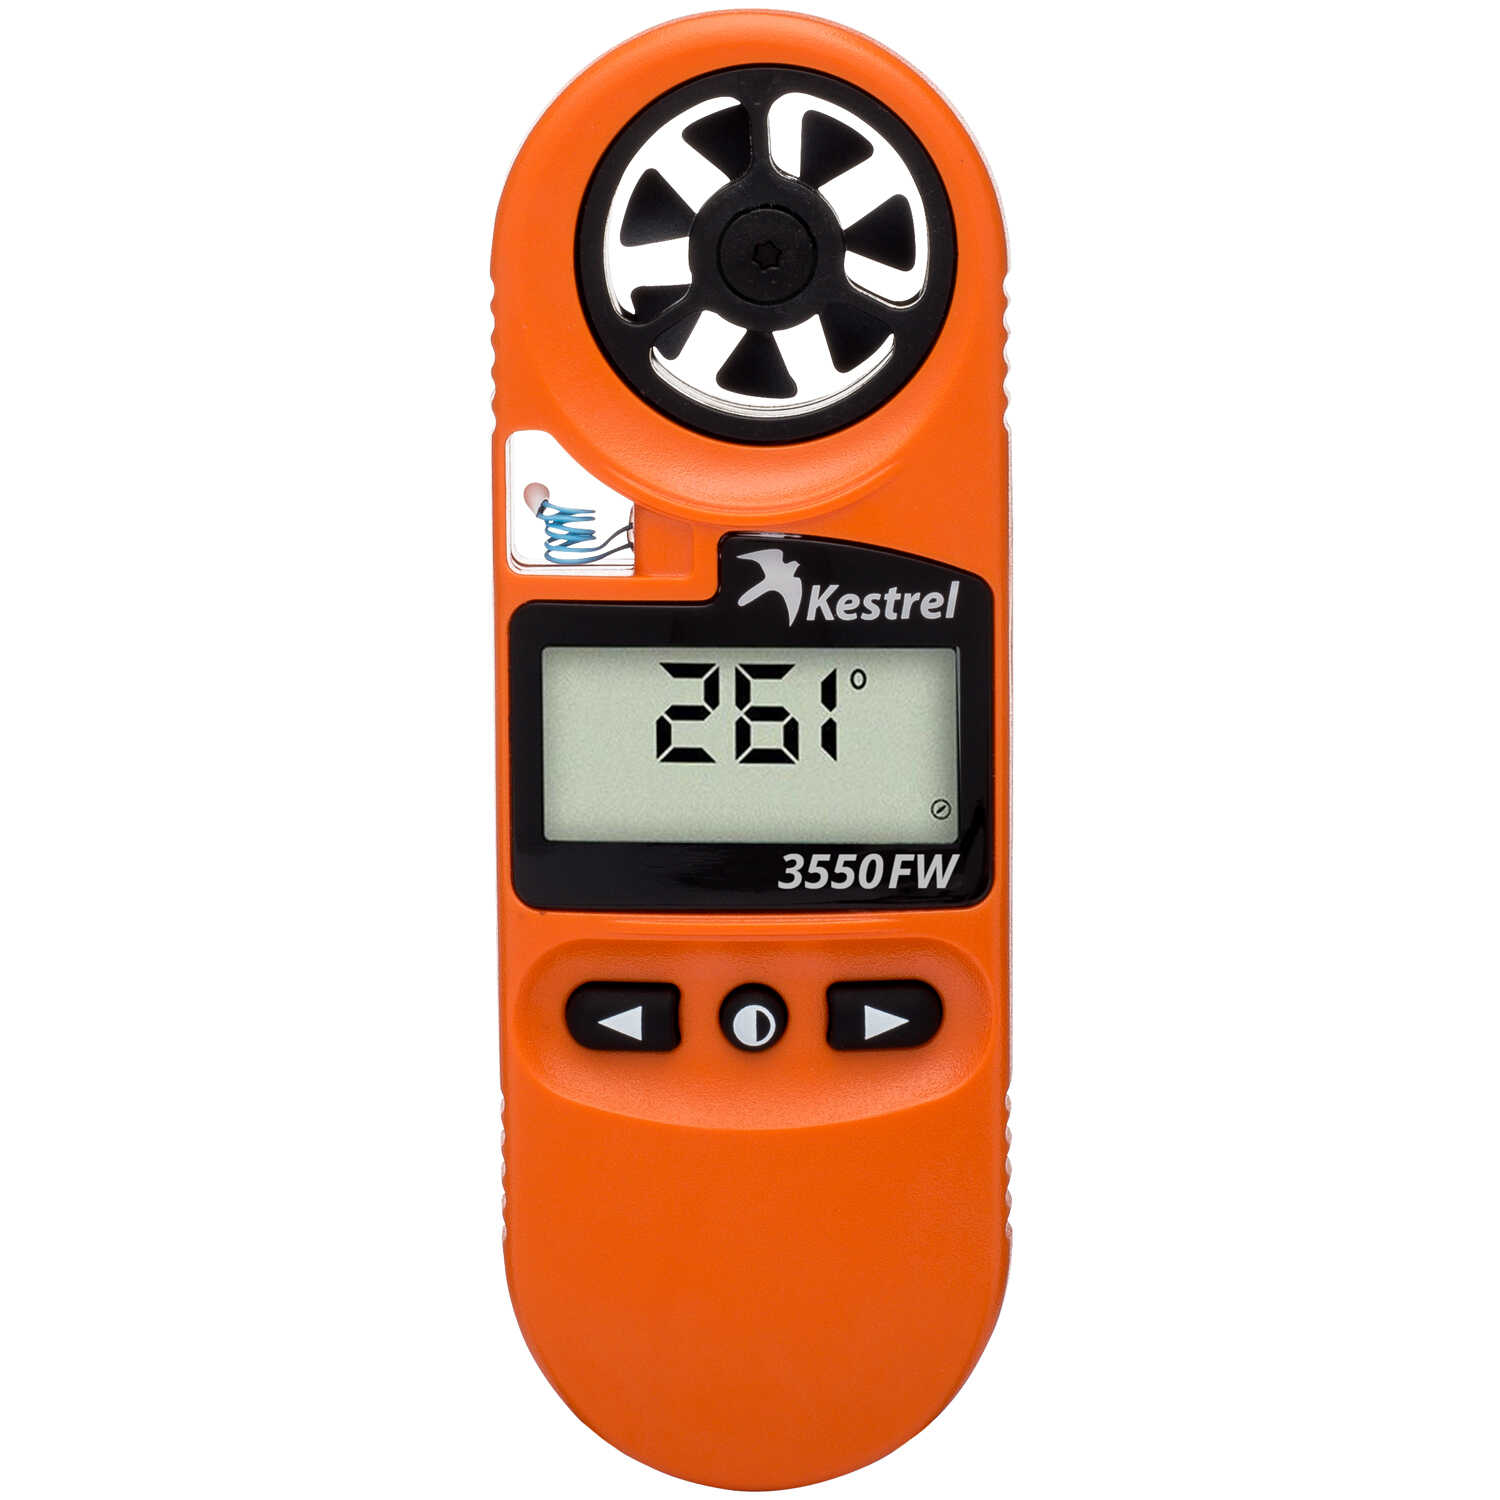 Kestrel 3500FW Professional Fire Weather Meter Orange 